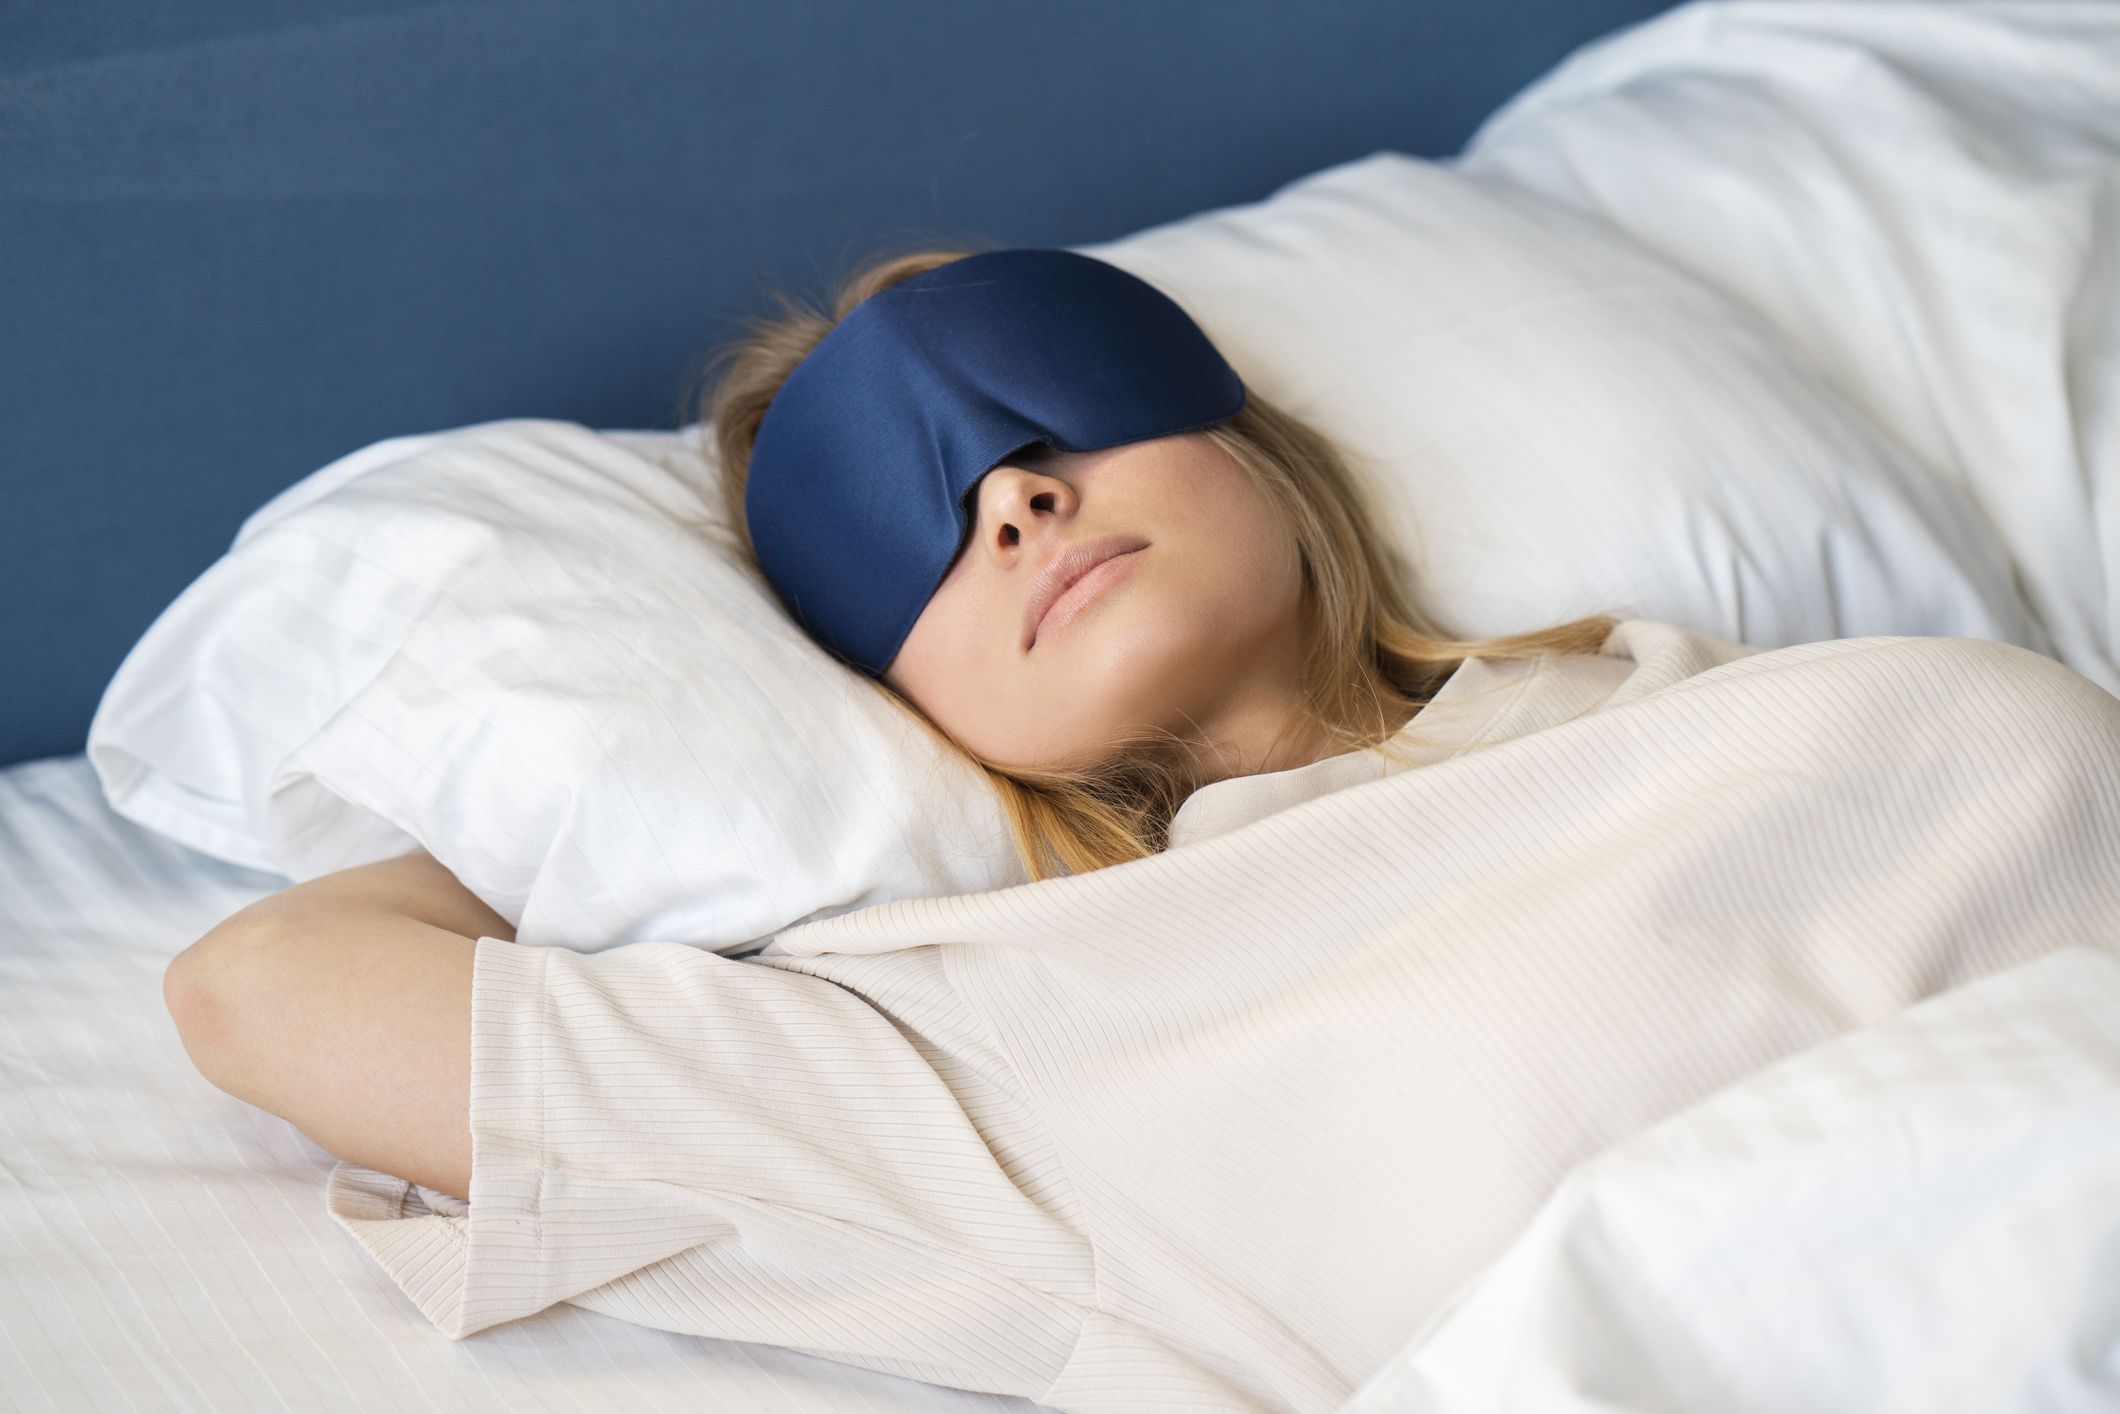 Slip Sleep Mask Review: The Best Sleep Mask for Flights